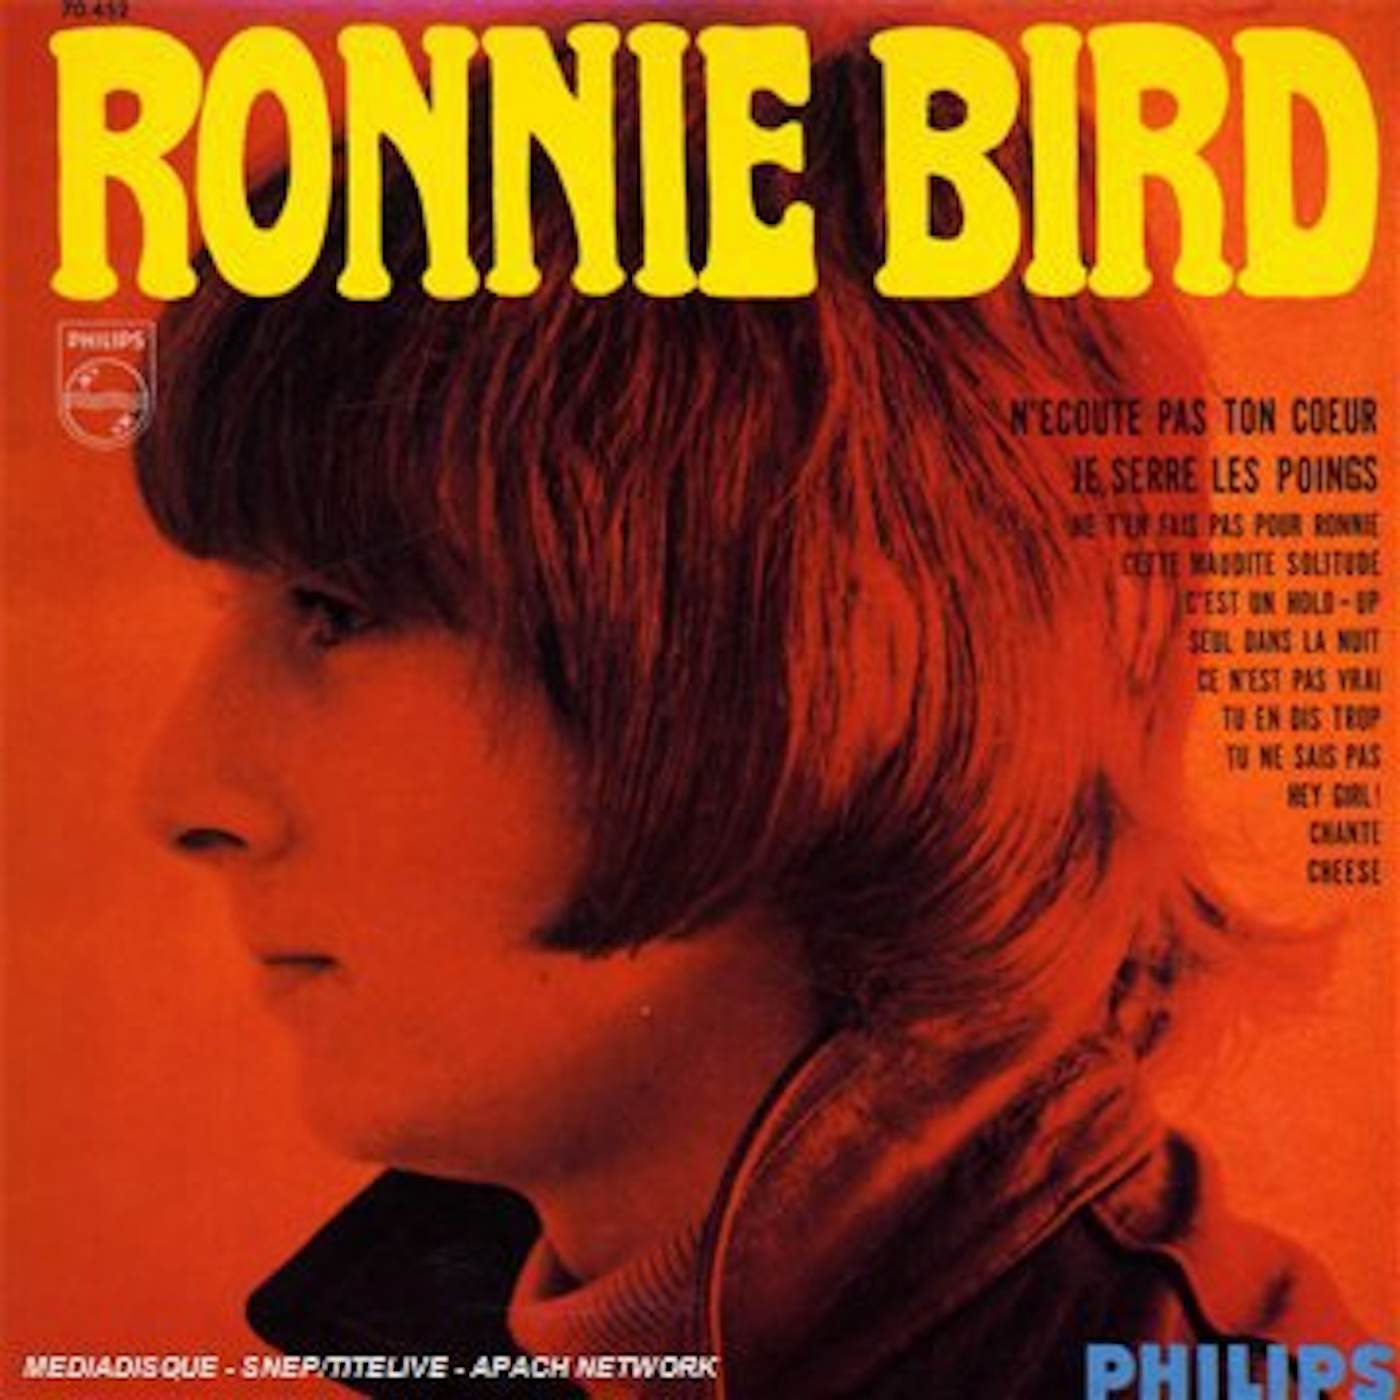 Ronnie Bird N'ECOUTE PAS TON COEUR Vinyl Record